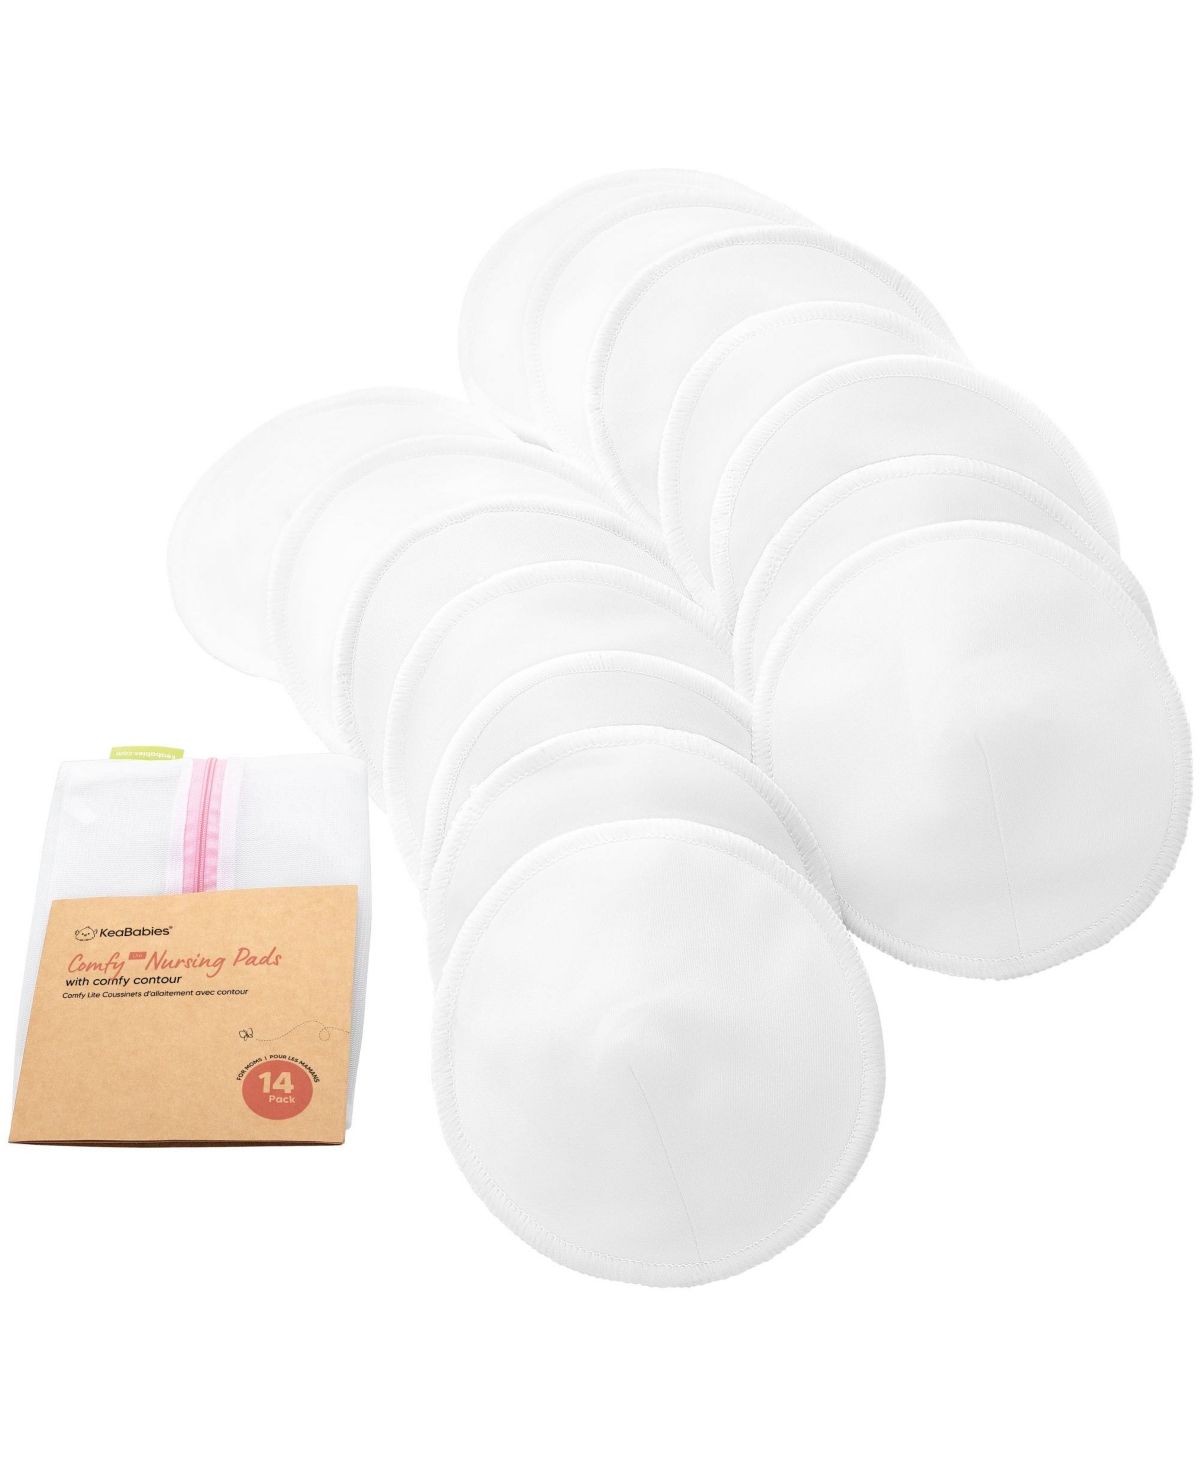 Keababies 14pk Organic Nursing Pads Lite, Washable Breast Pads + Wash Bag, Reusable Nipple Pads In Soft White